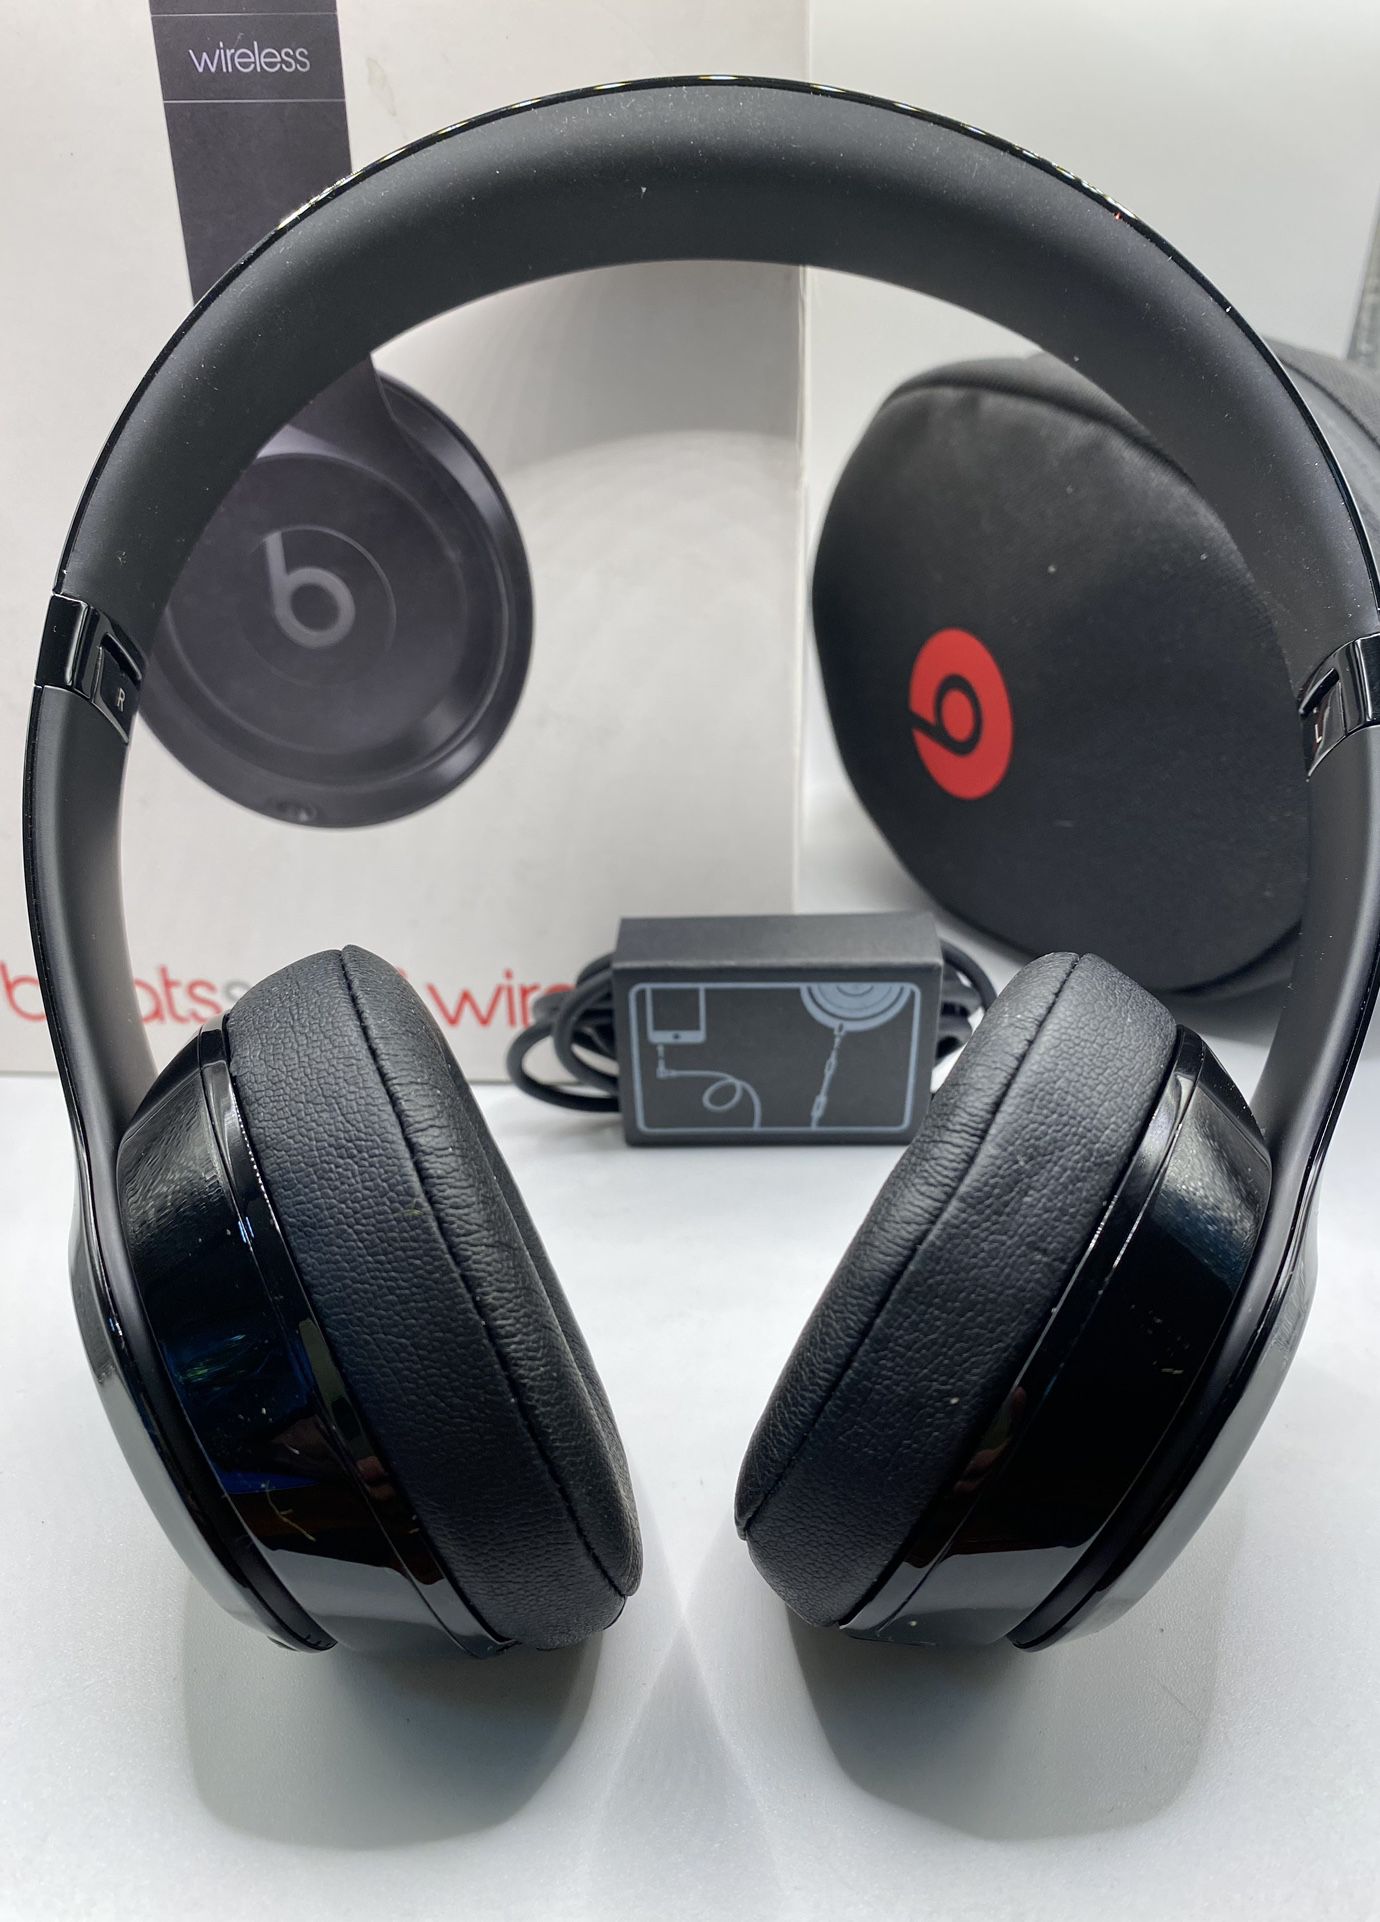 (Authentic) Black Beats Solo3 Bluetooth Wireless Headphones With Box #2018